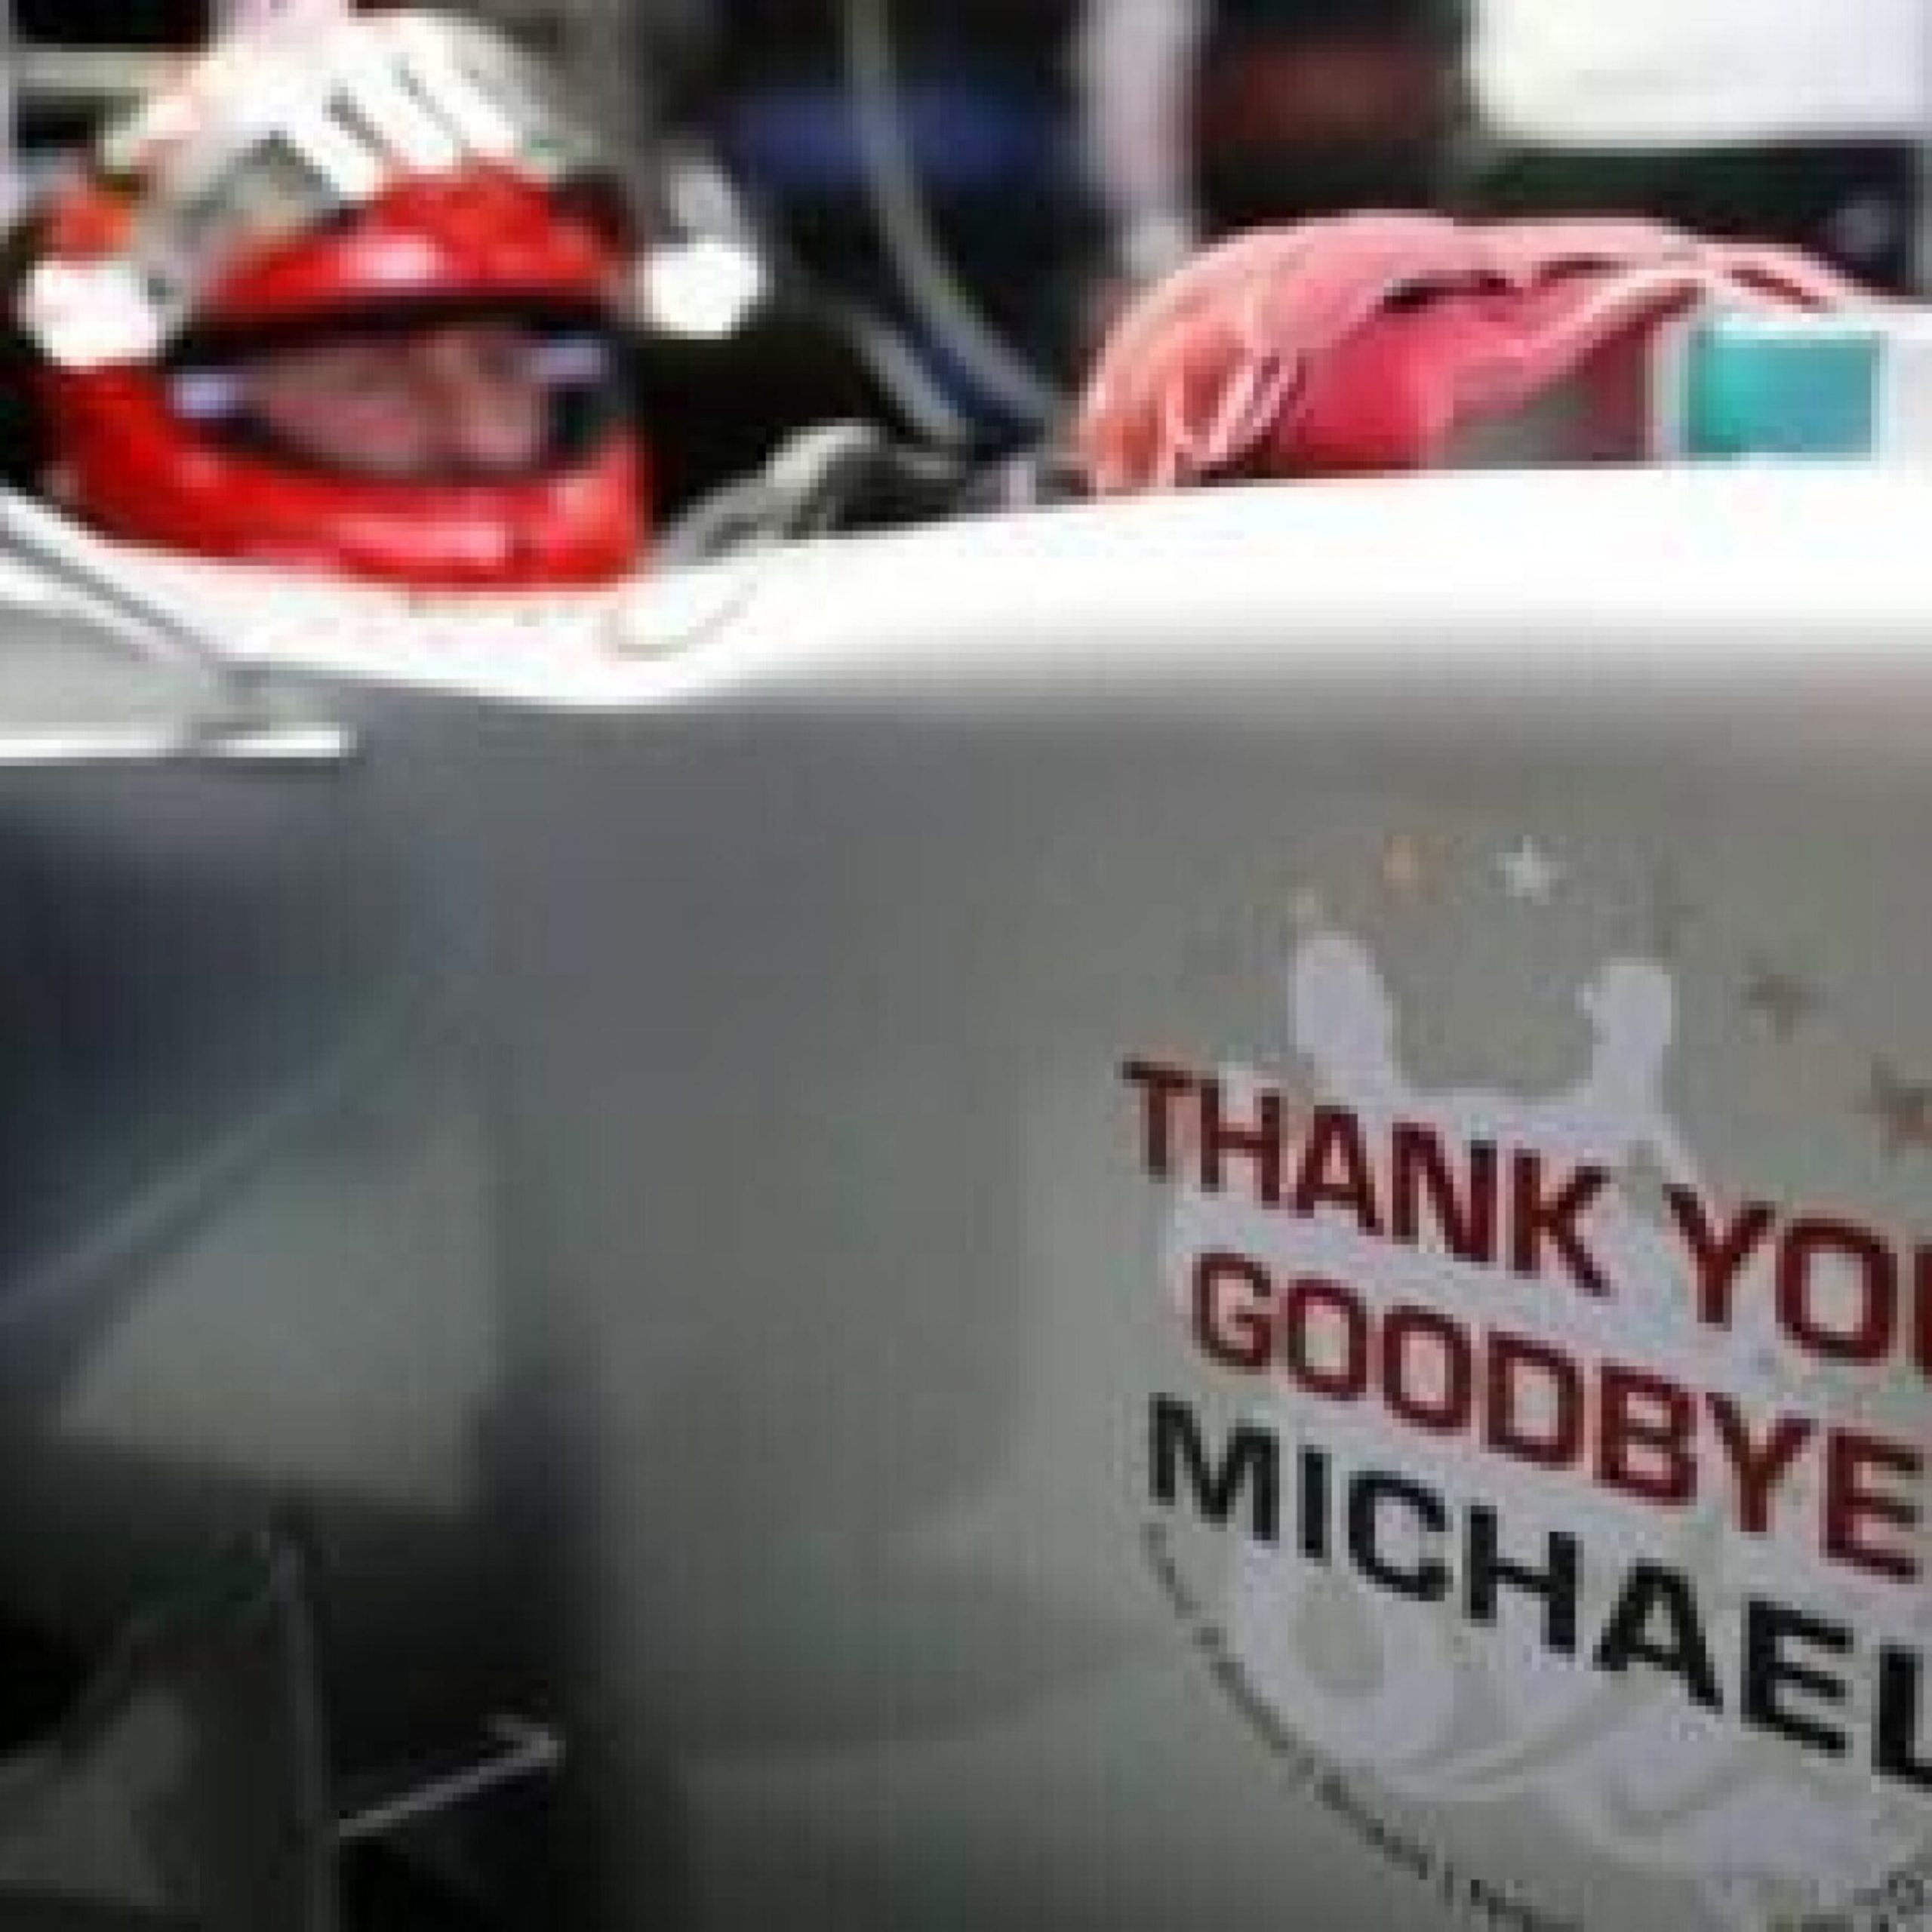 Inside Line F1 Podcast - If Schumacher Turns TV Commentator